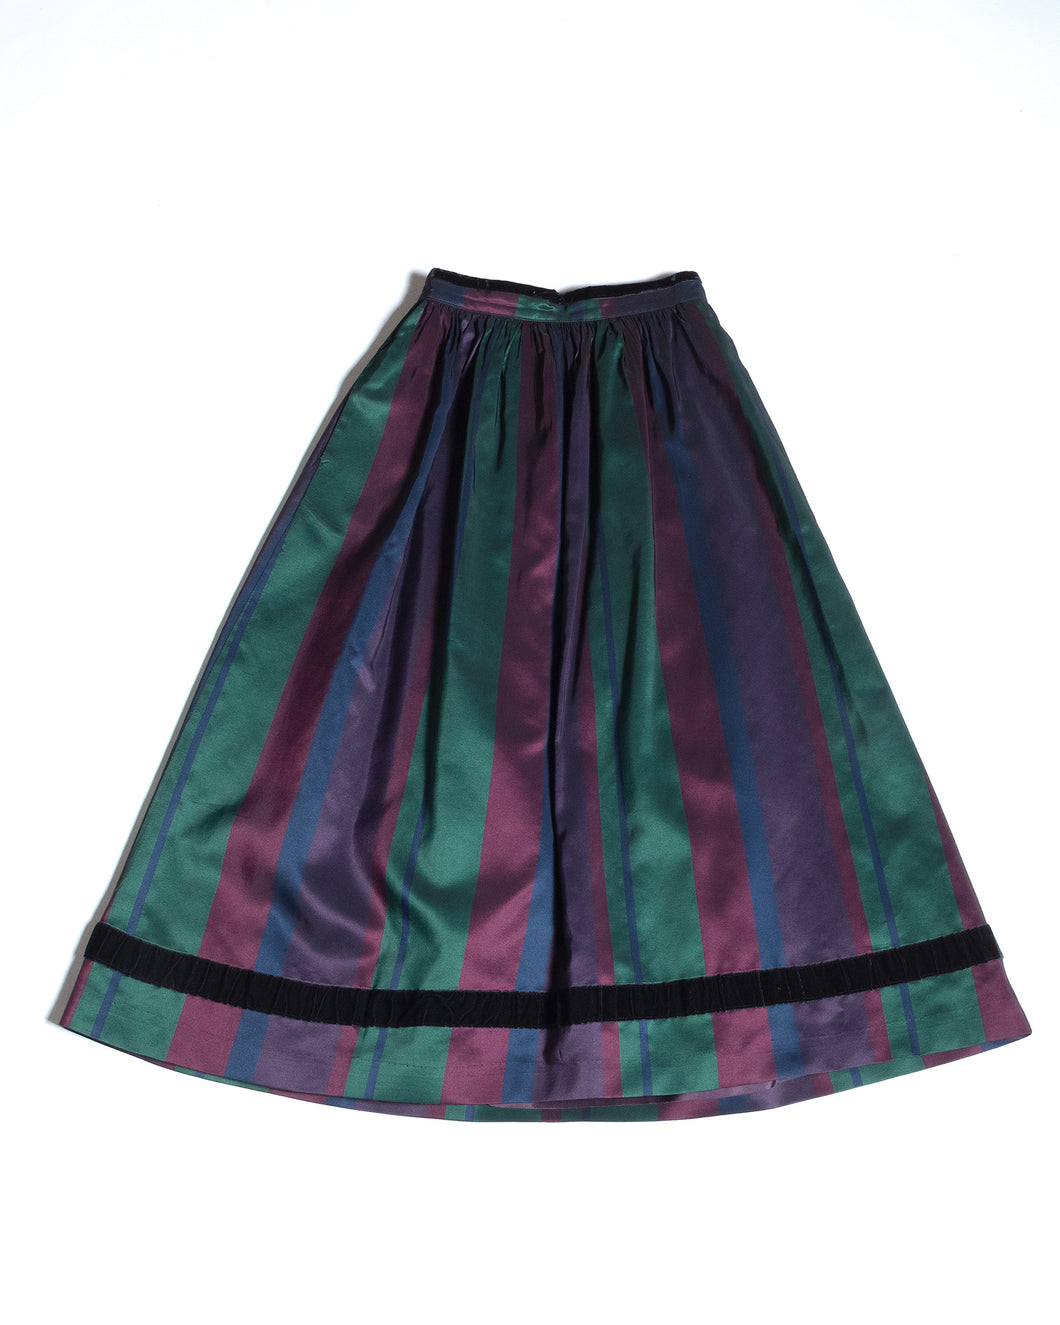 80's Jewel Tone Striped Taffeta Skirt with velvet Trim